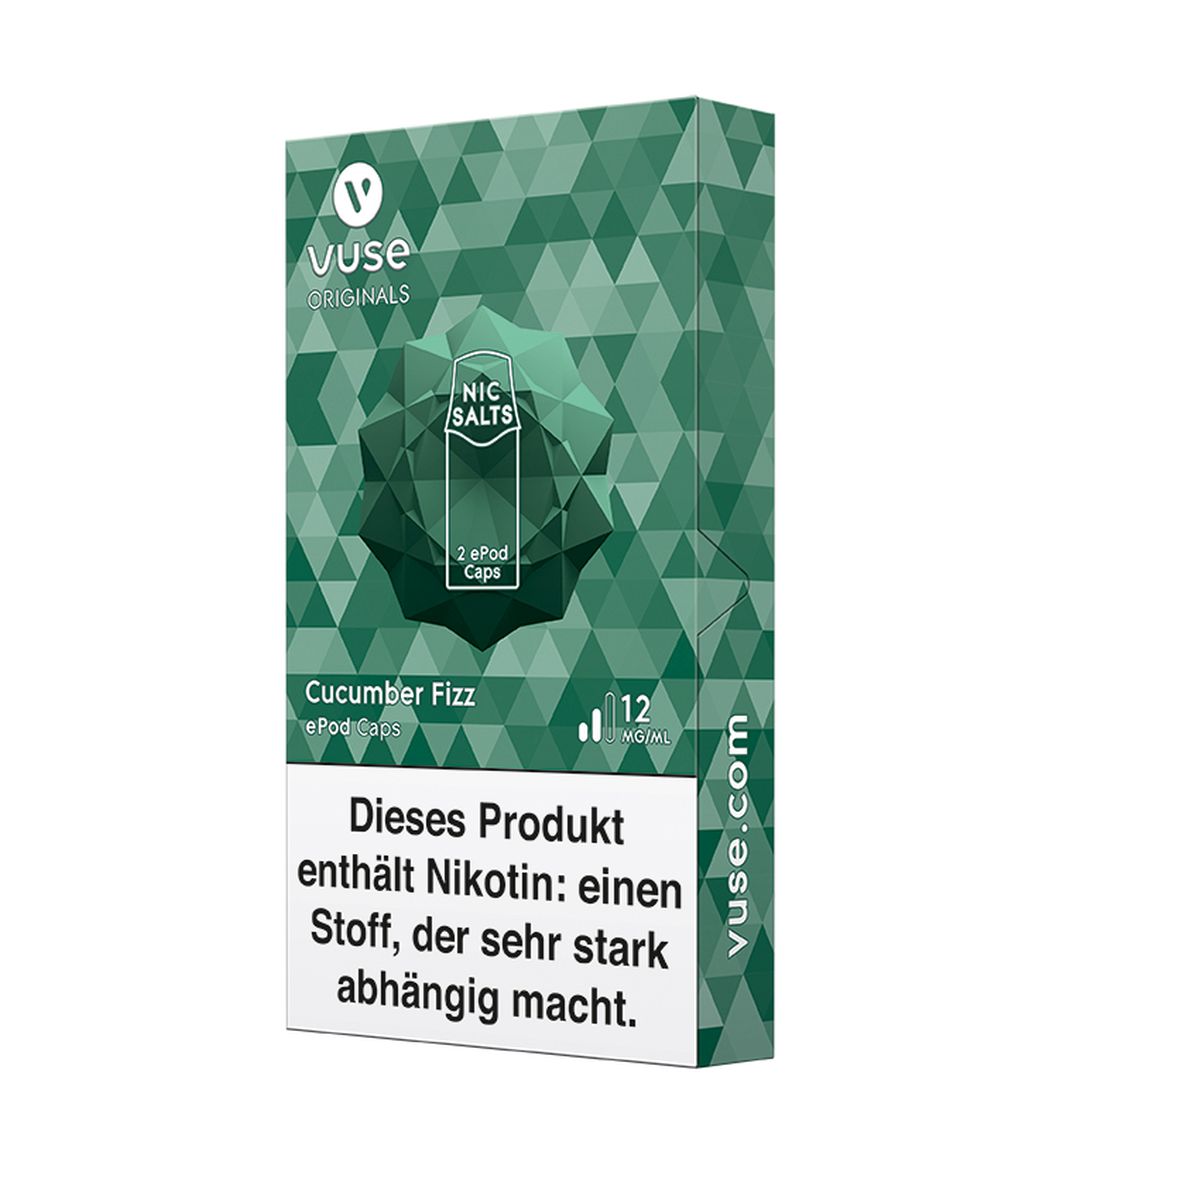 Vuse Vuse ePod Caps Cucumber Fizz Nic Salts 12mg Nikotin 1,9ml bei www.Tabakring.de kaufen